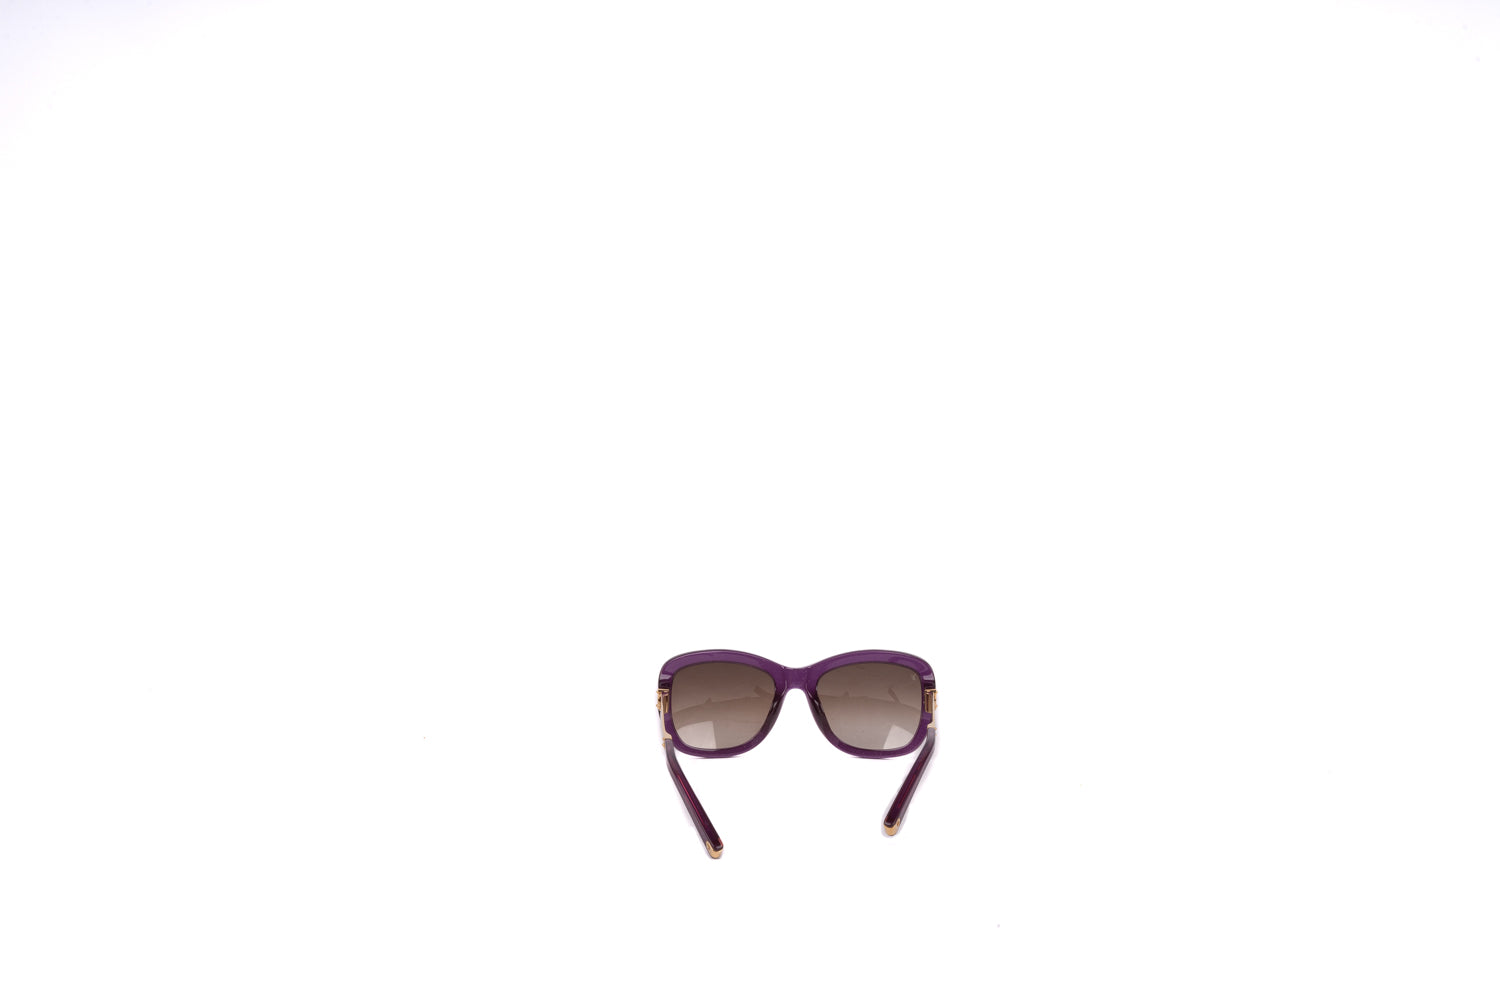 Violet Speckling Acetate Frame Soupcon Sunglasses